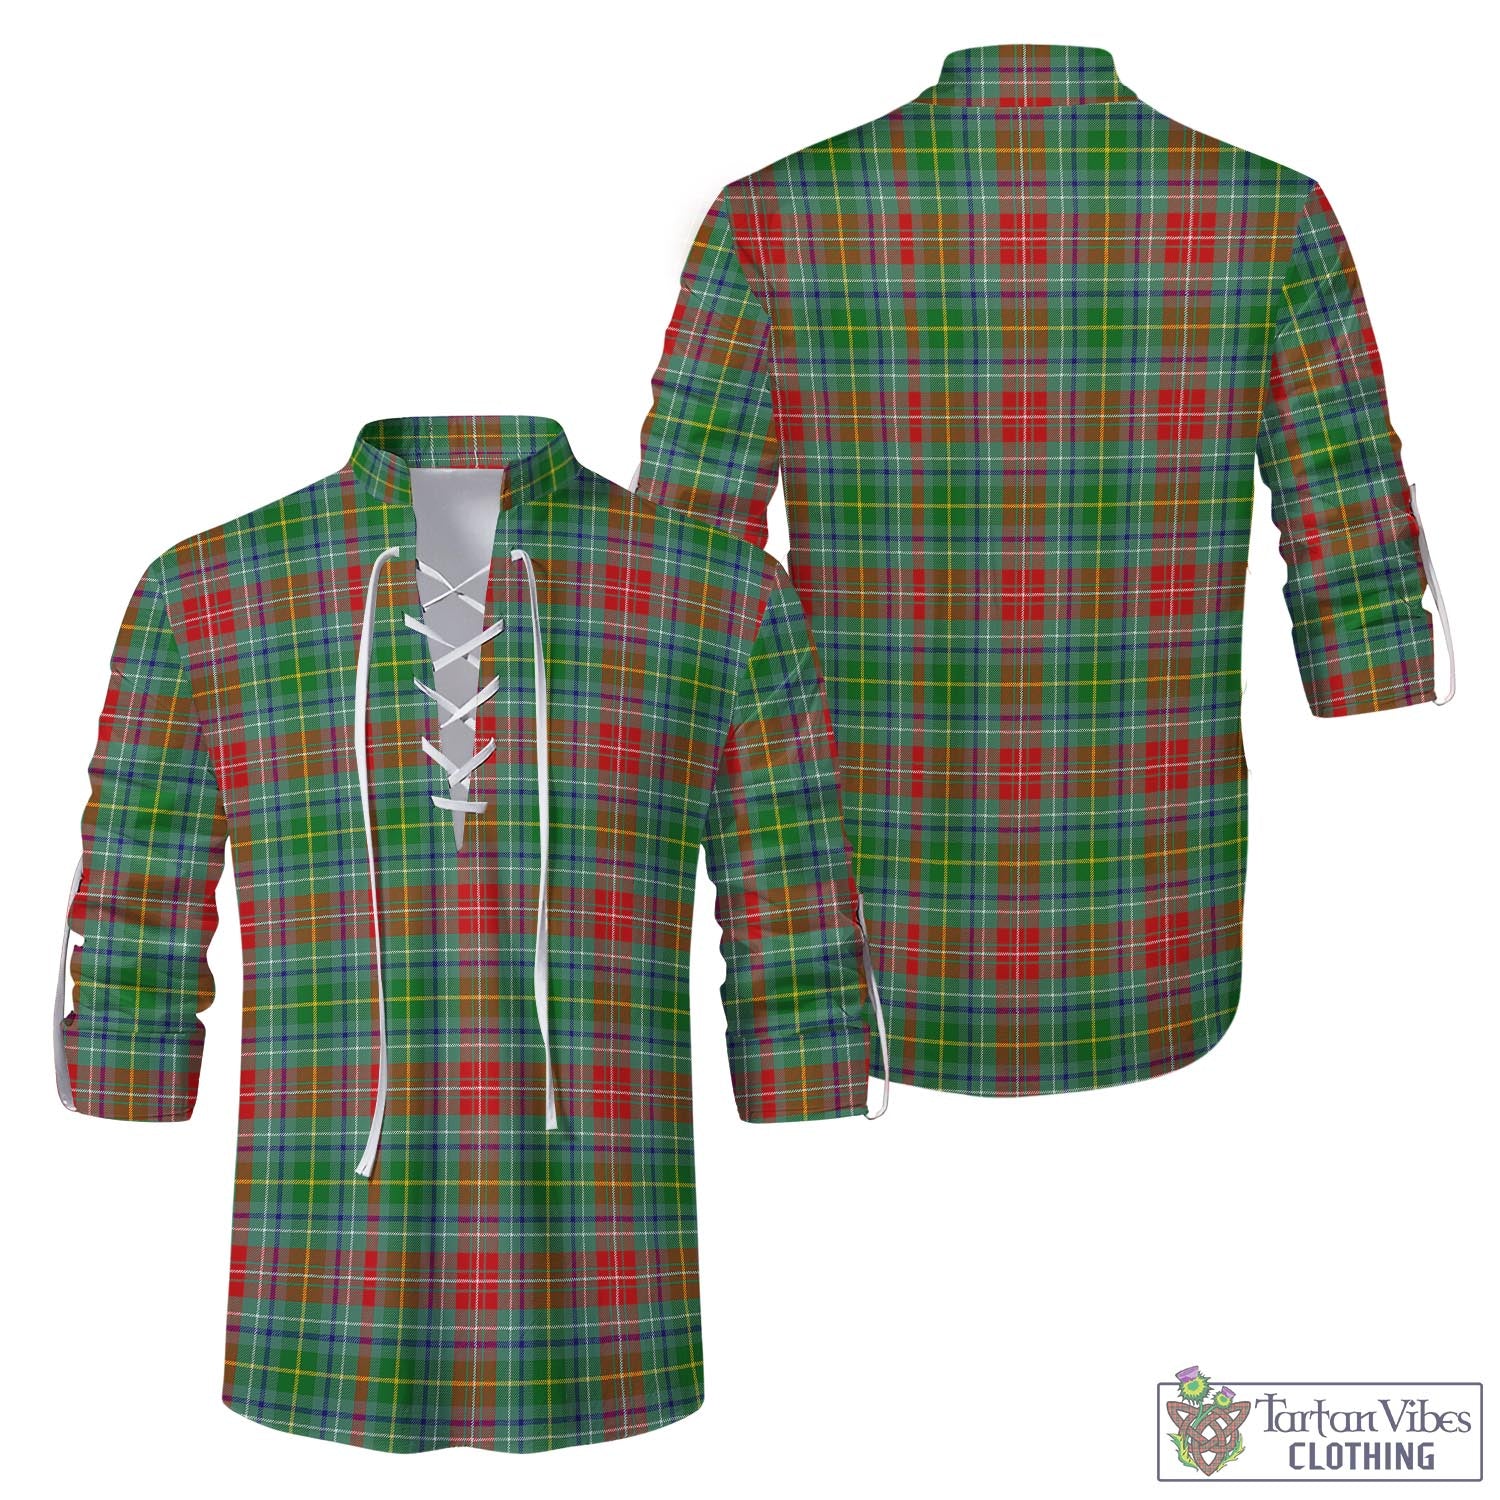 Tartan Vibes Clothing Muirhead Tartan Men's Scottish Traditional Jacobite Ghillie Kilt Shirt